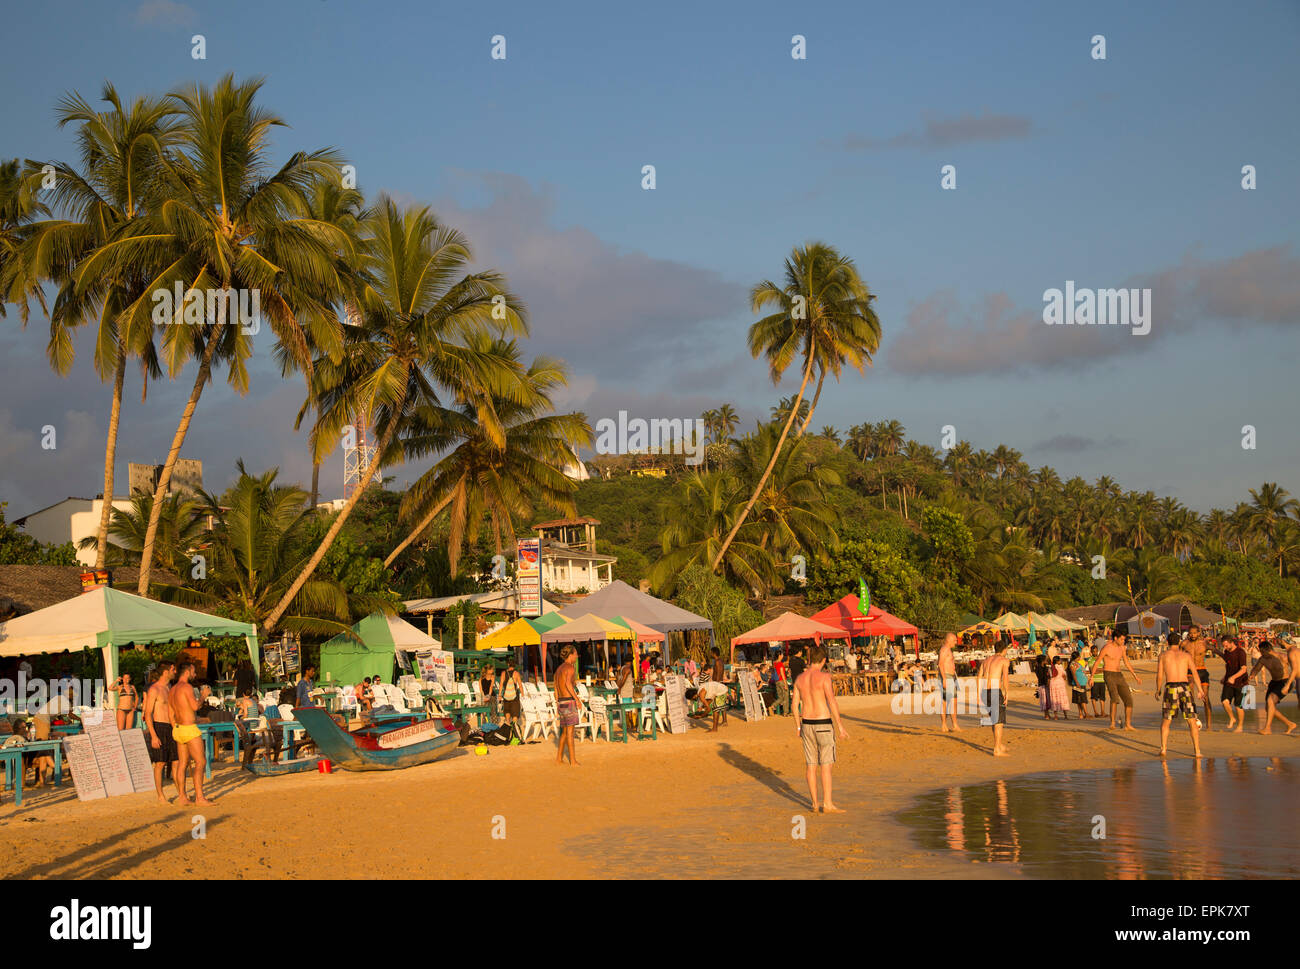 Crowded sandy beach at Mirissa, Sri Lanka, Asia Stock Photo